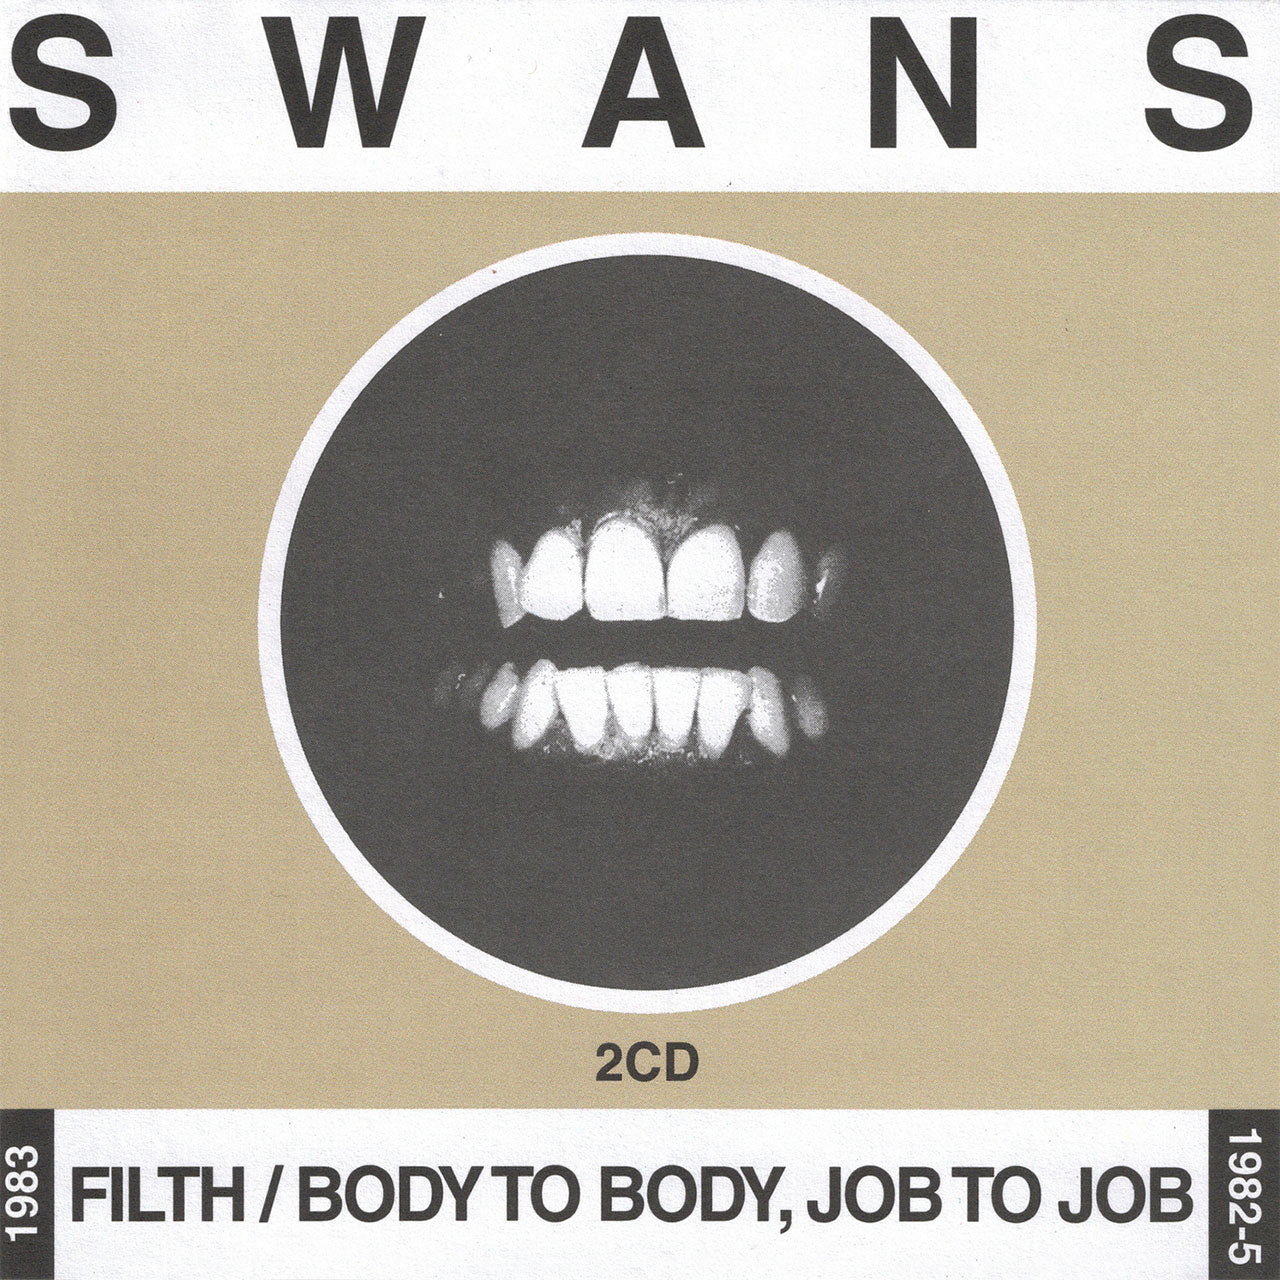 Swans - Filth / Body to Body, Job to Job (2CD)